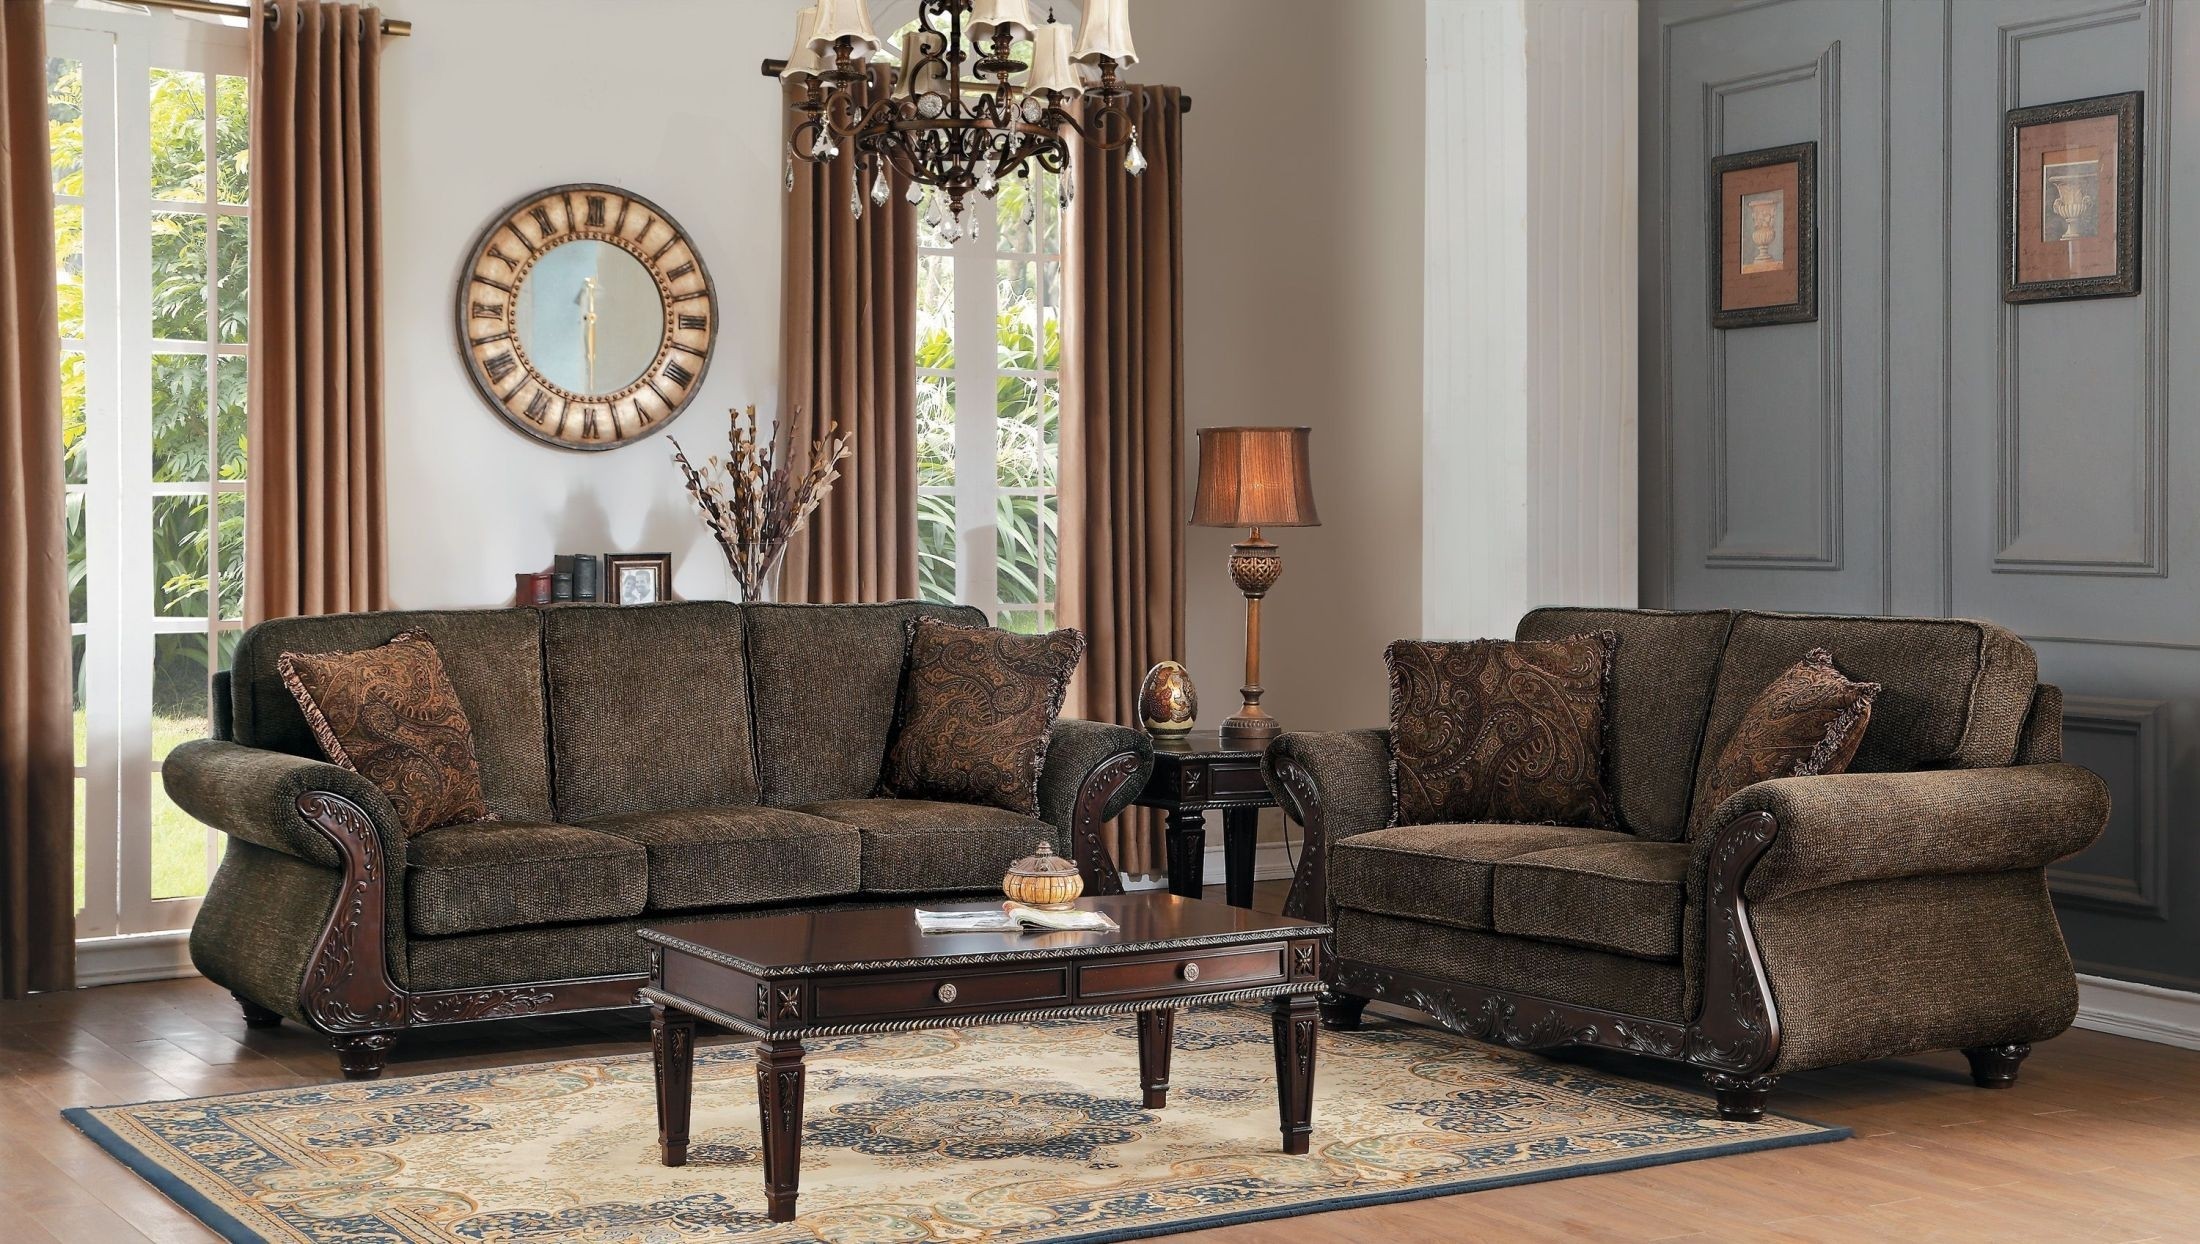 Mandeville brown chenille living room set from homelegance